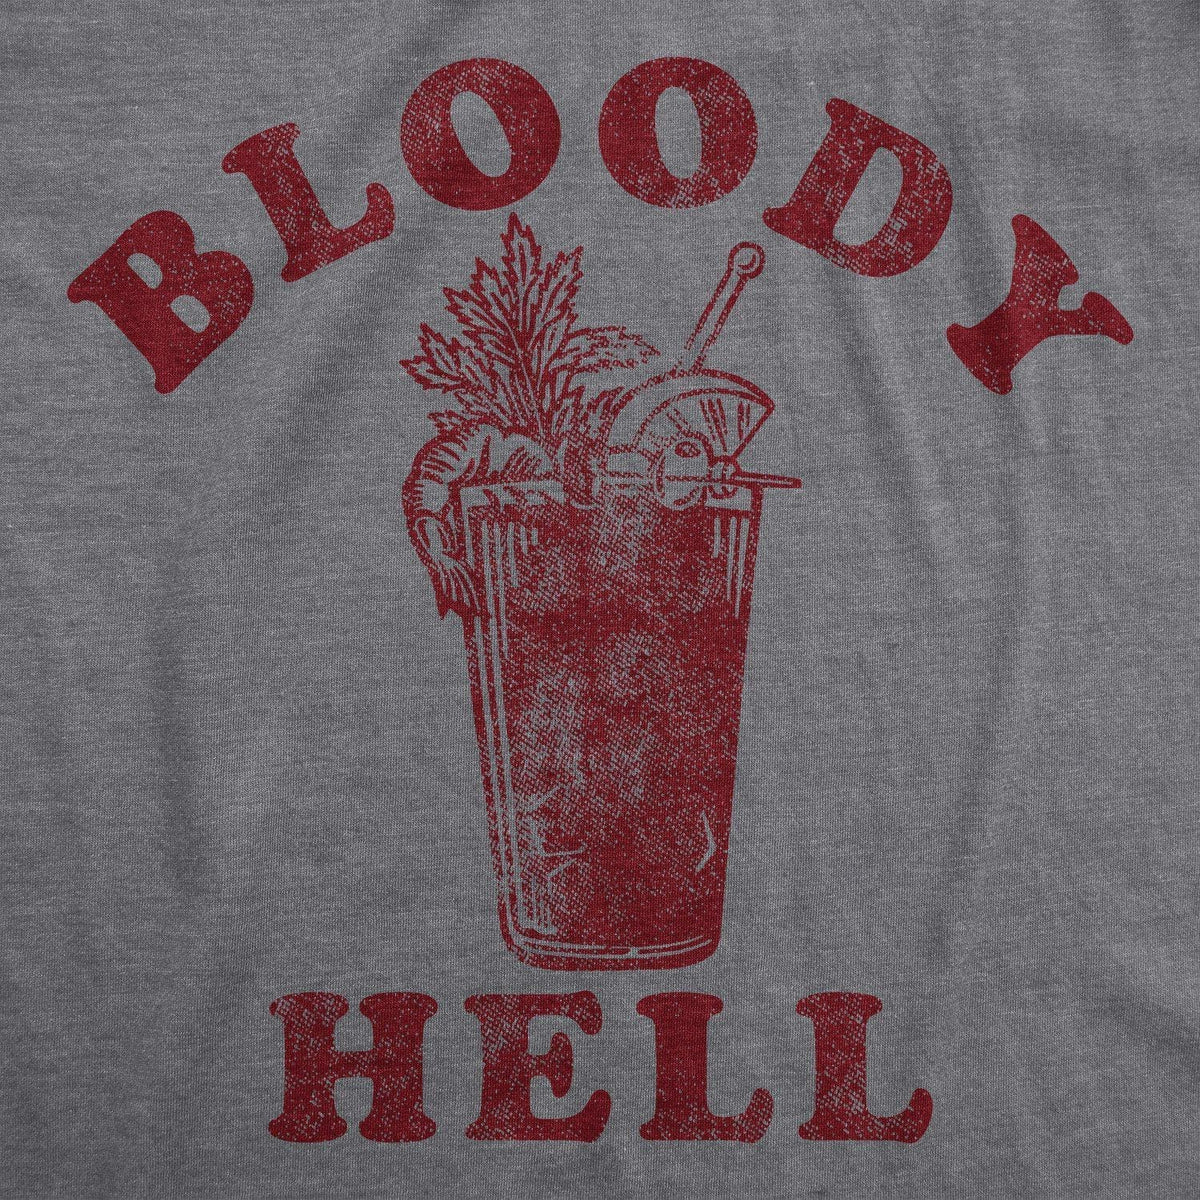 Bloody Hell Women&#39;s Tshirt - Crazy Dog T-Shirts